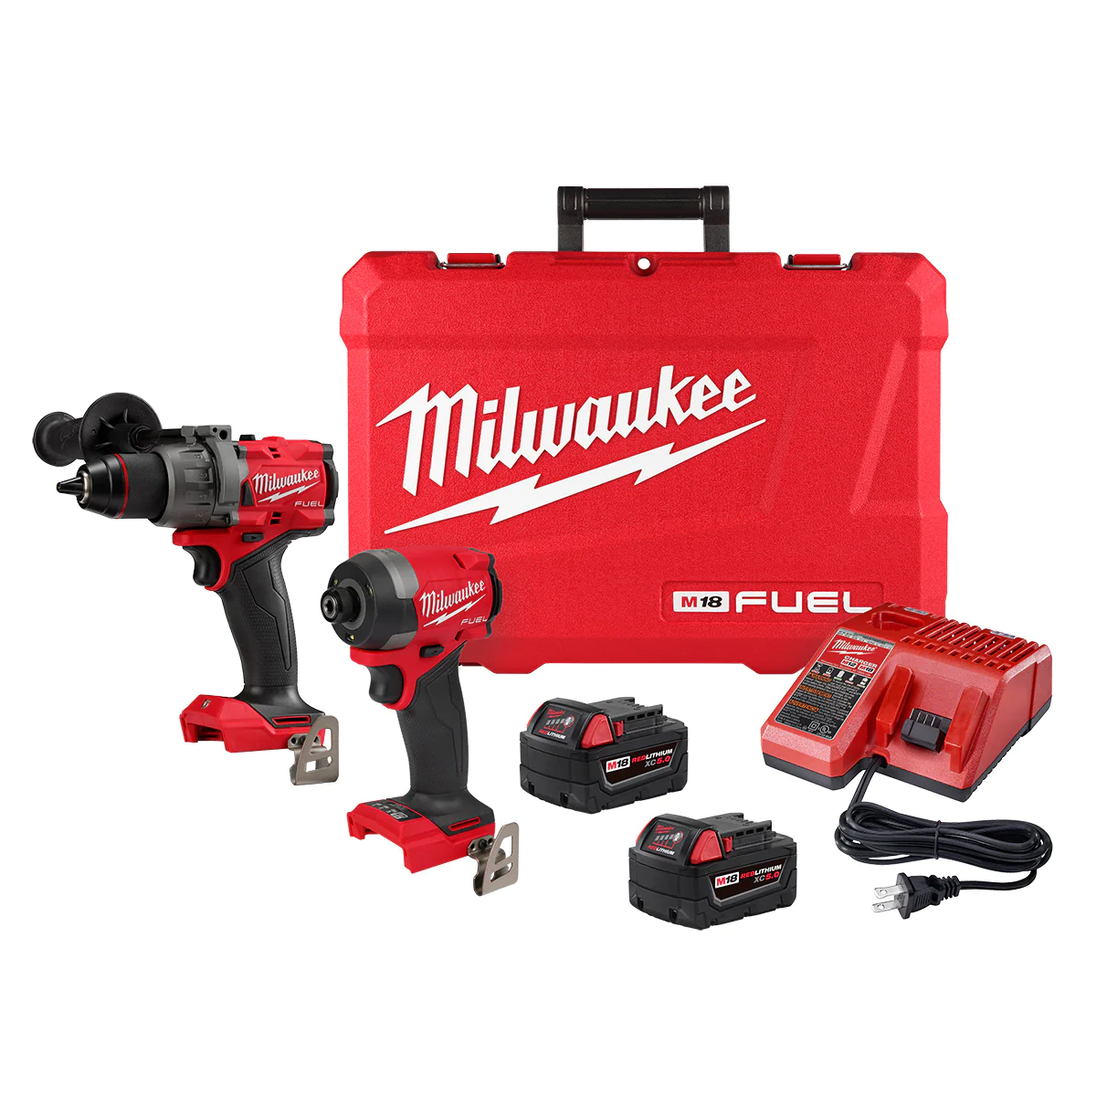 Milwaukee 3697-22 Hammer Drill and Impact Driver Kit